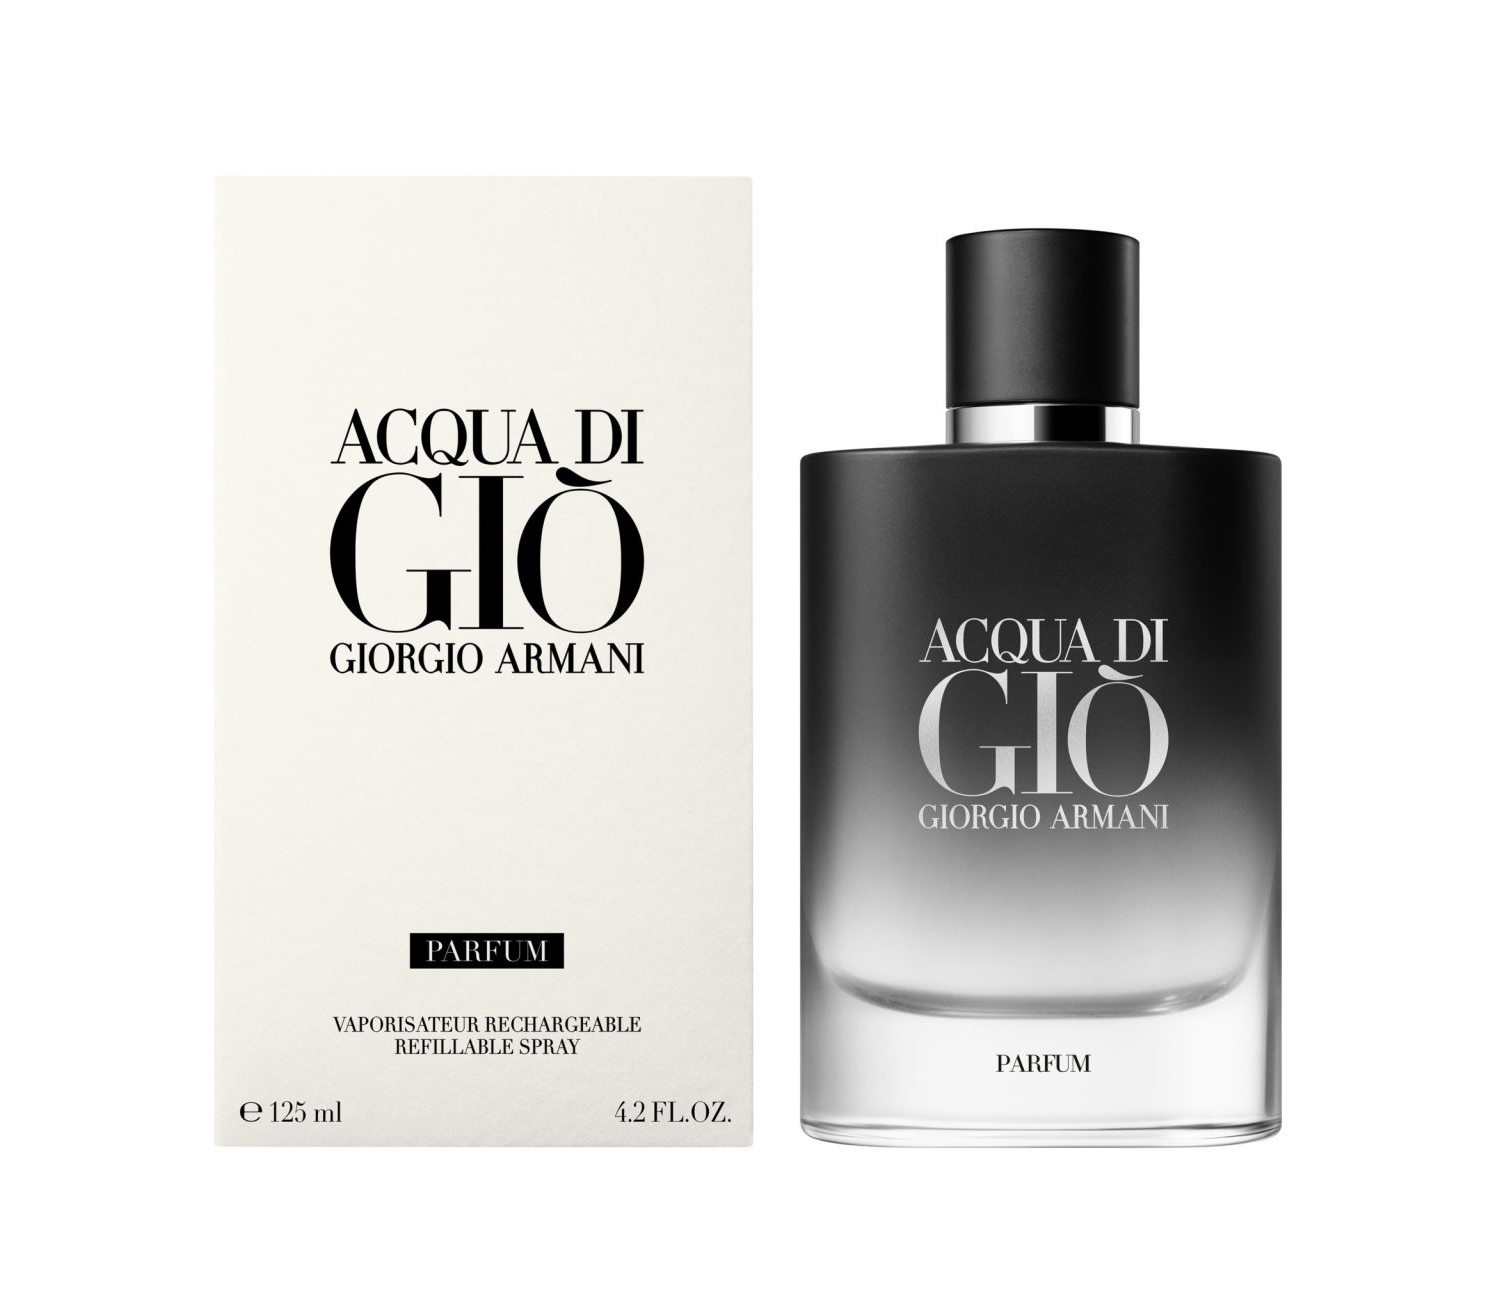 Nước hoa Giorgio Armani Acqua Di Gio Pour Homme  namperfume